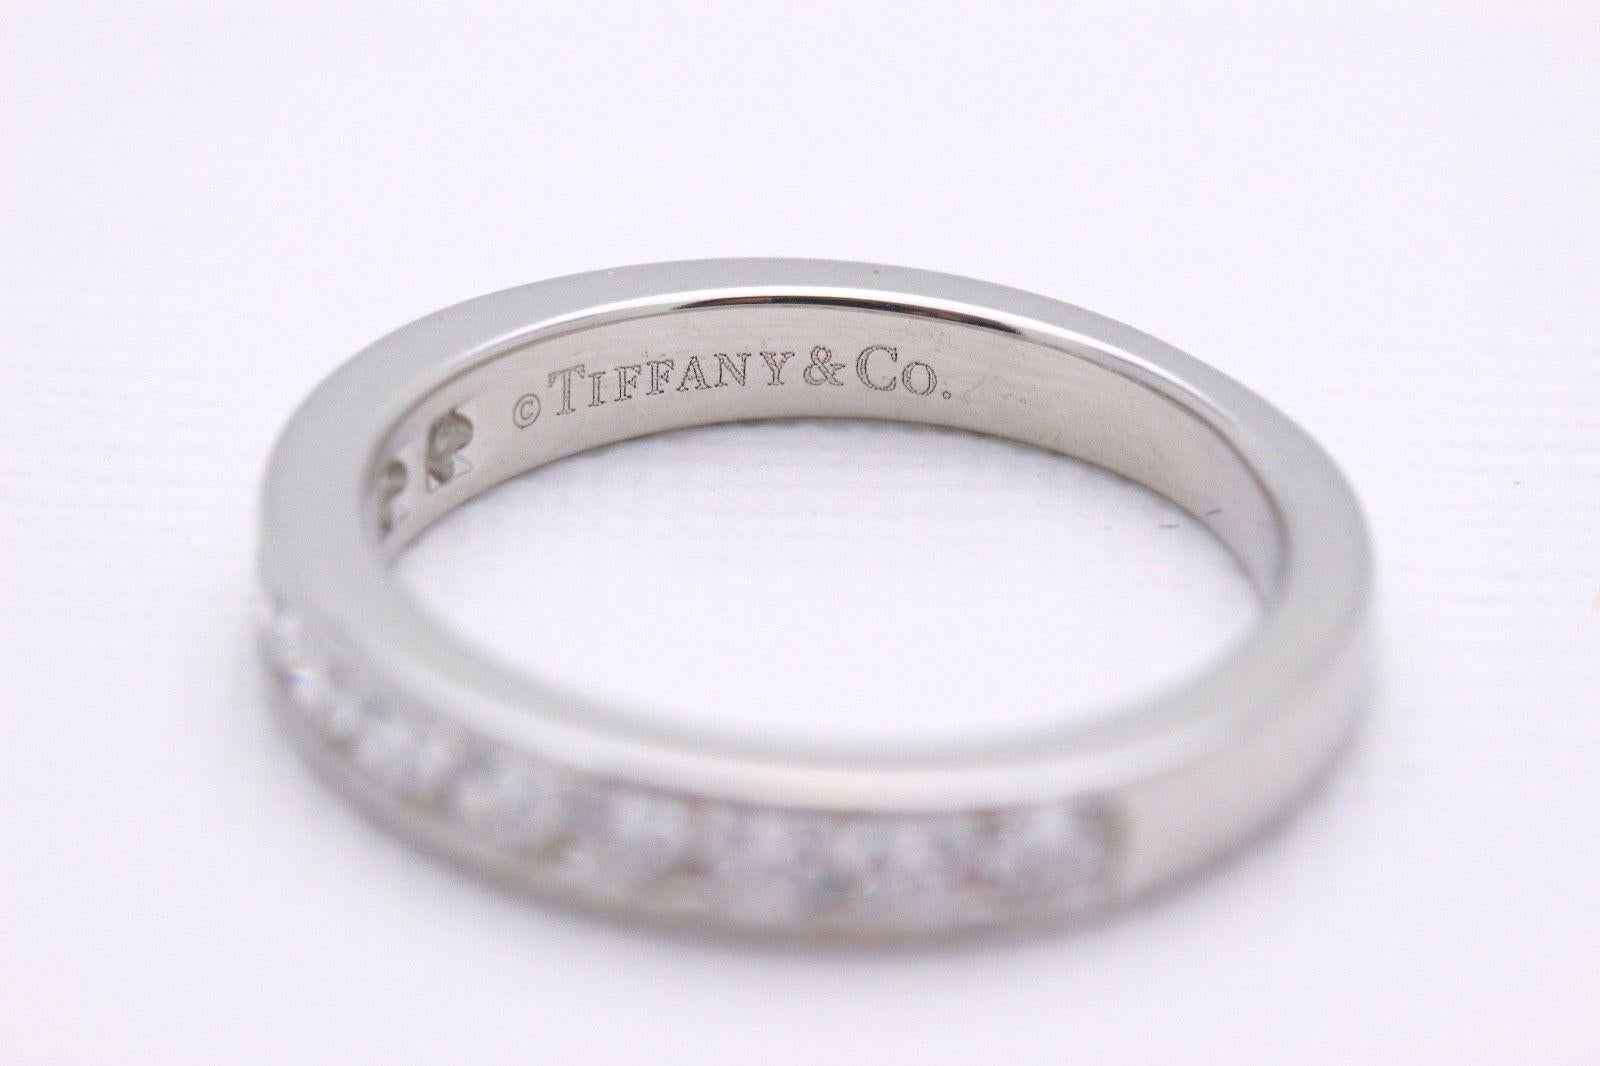 Tiffany & Co.
Style: Half Circle Diamond Wedding Band
Sku Number:  16183334
Size:  4- sizable
Metal:  Platinum PT950
Total Carat Weight:  0.24 Cts.
Diamond Shape:  Round Brilliant 
Diamond Color & Clarity:  F / VS
Hallmark:  